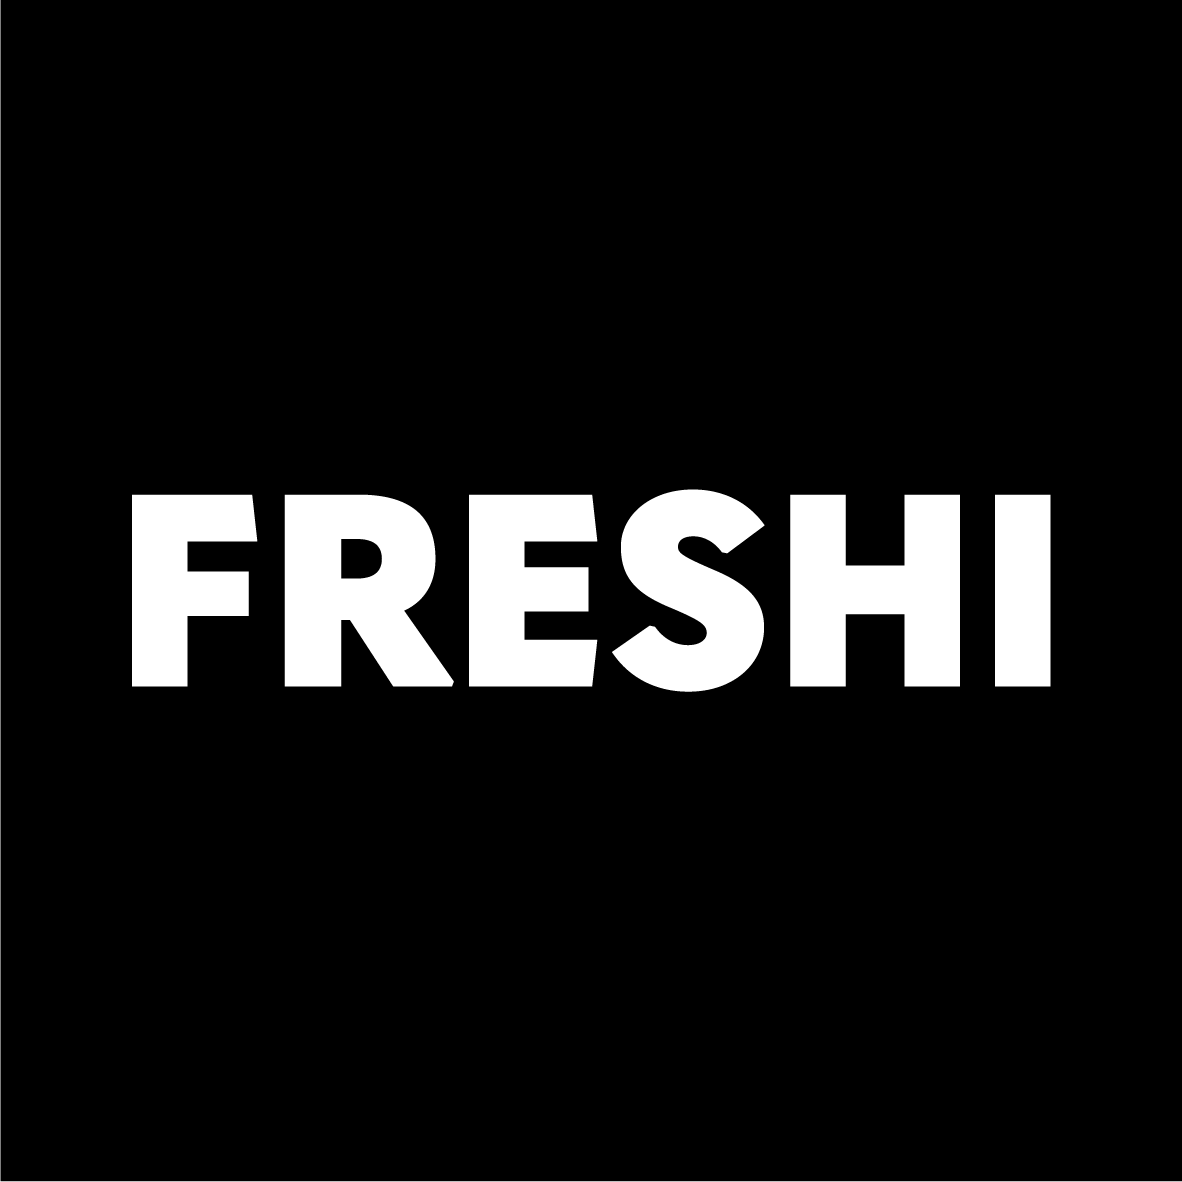 Freshi-01.png